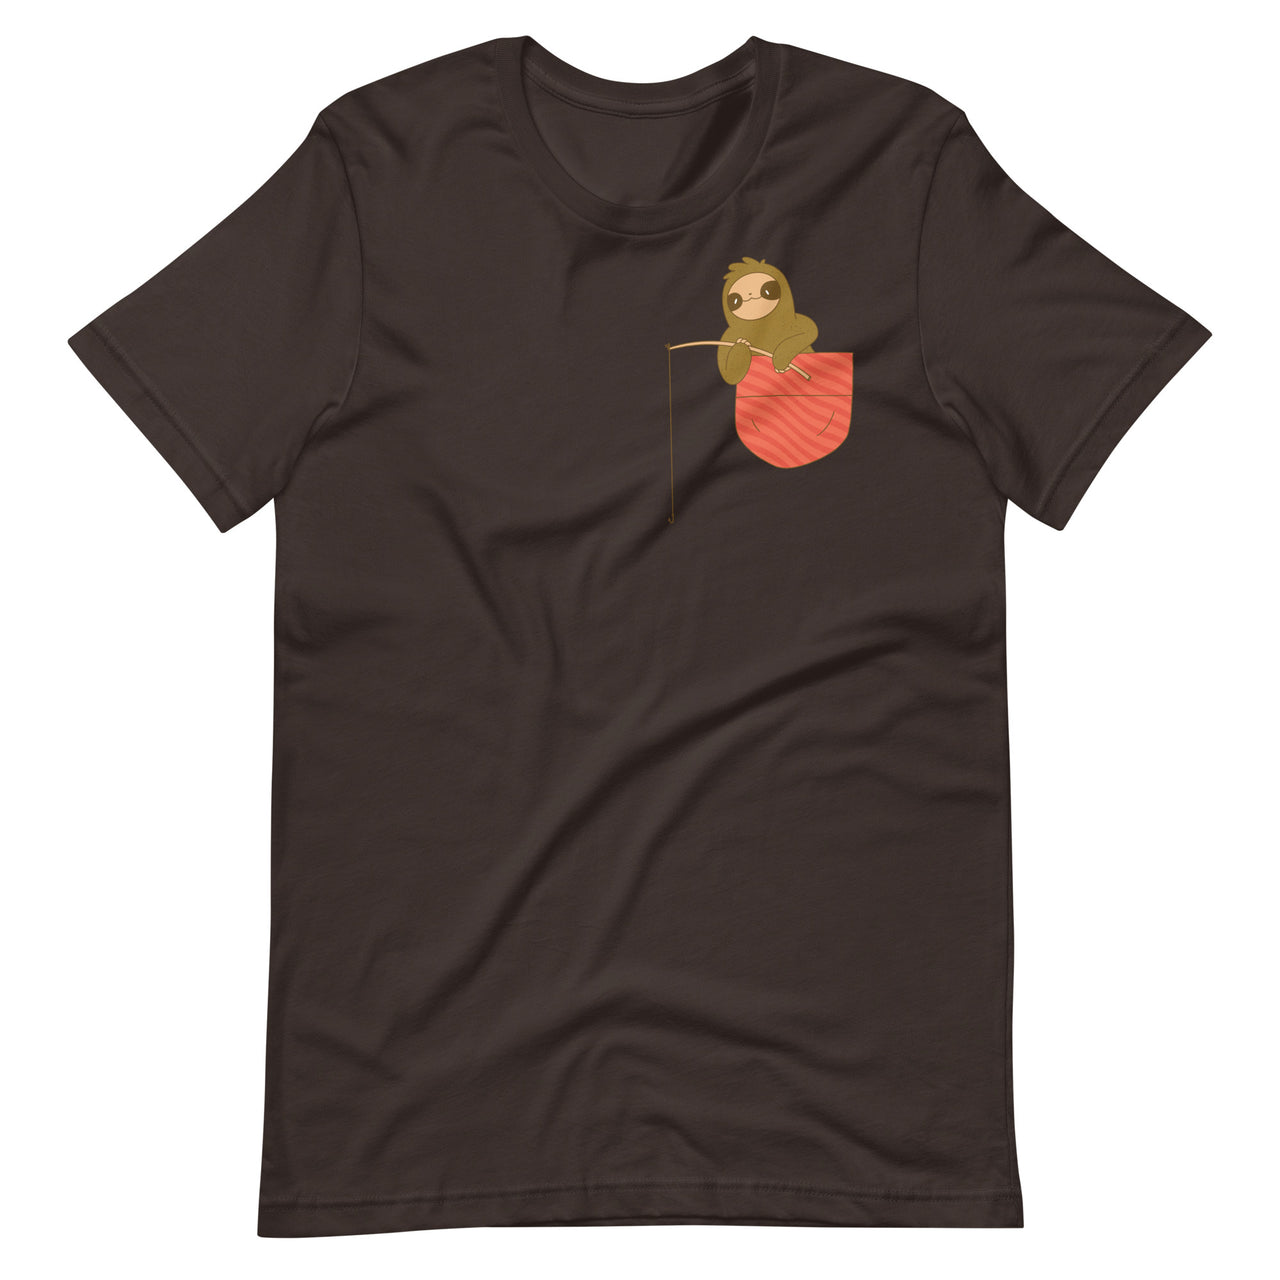 Sloth Fishing in Pocket T-Shirt